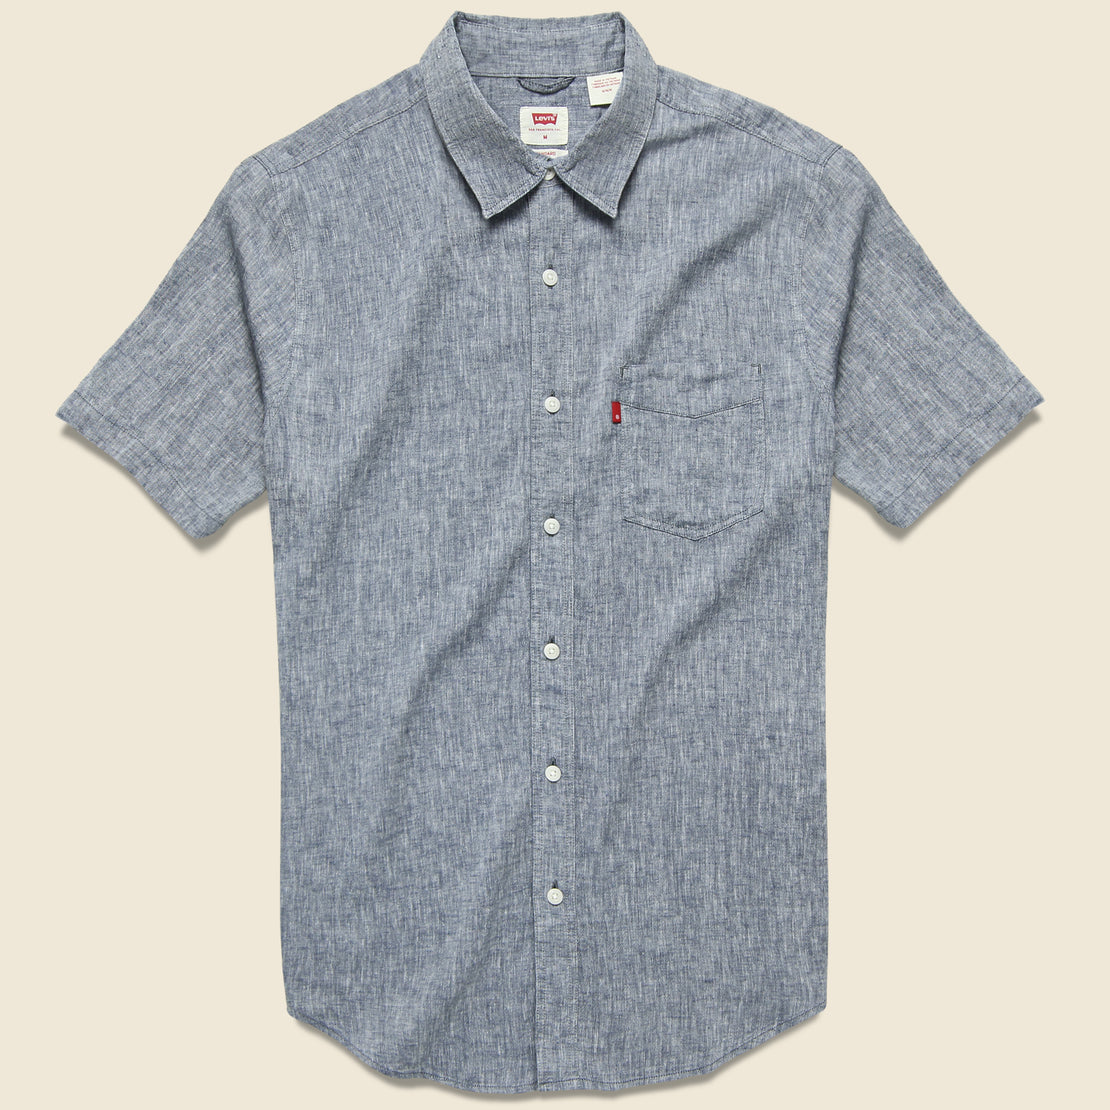 Levis Premium Sunset One-Pocket Shirt - Dress Blues